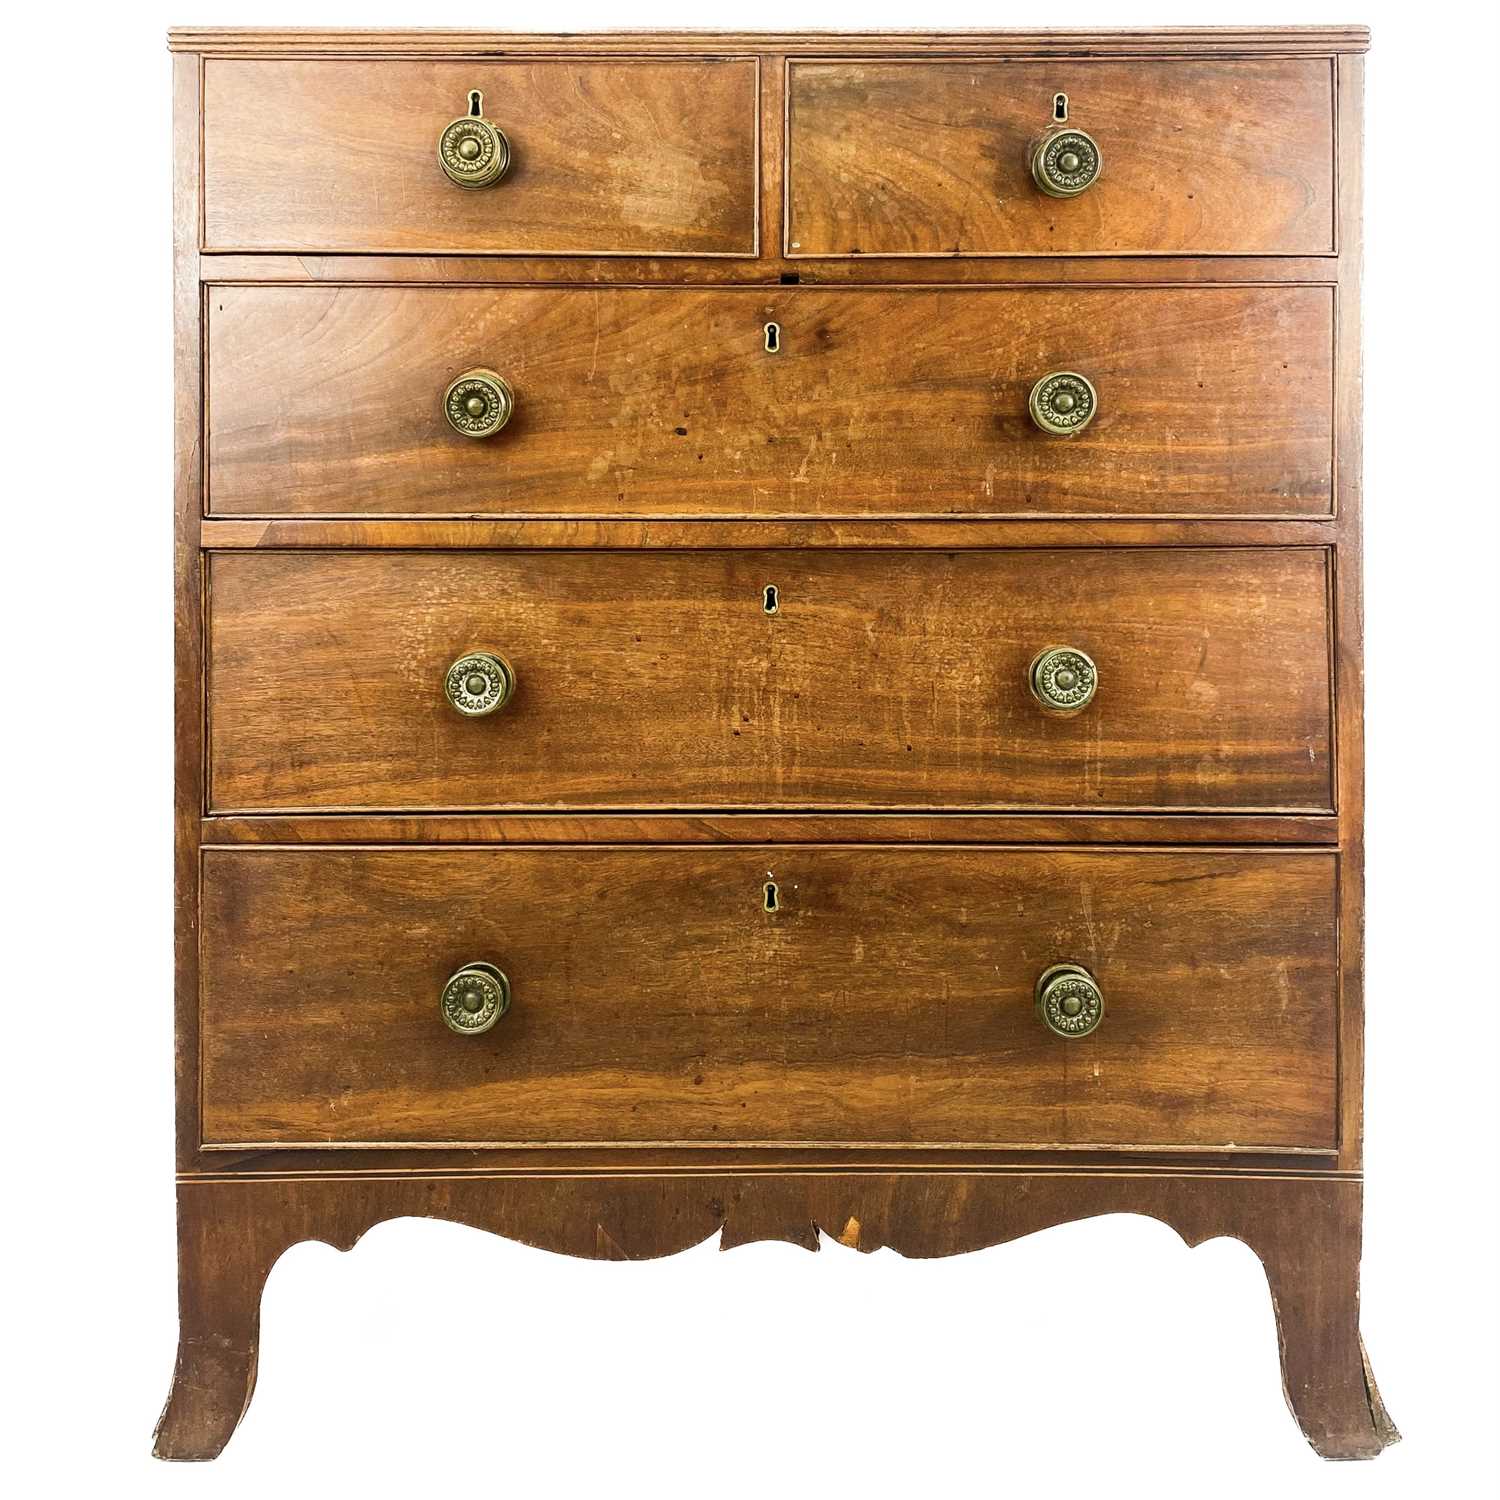 A George III mahogany chest.